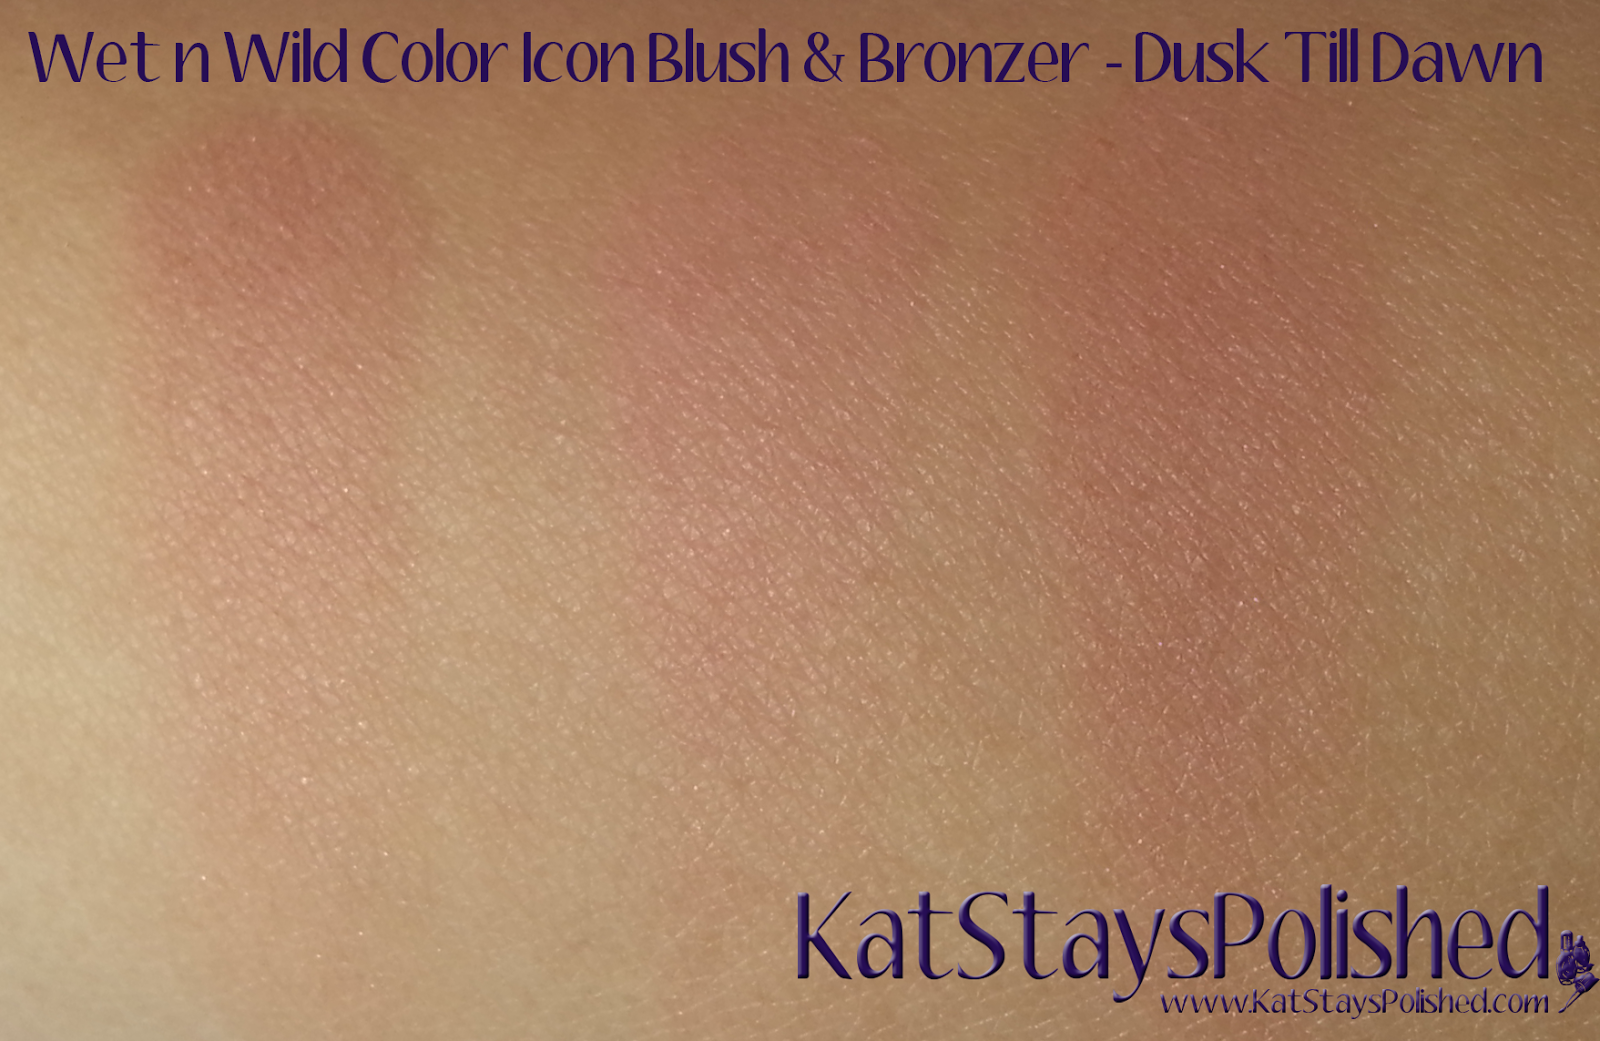 Wet n Wild ColorIcon Bronzer & Blush - Summer 2014 - Dusk Till Dawn | Kat Stays Polished